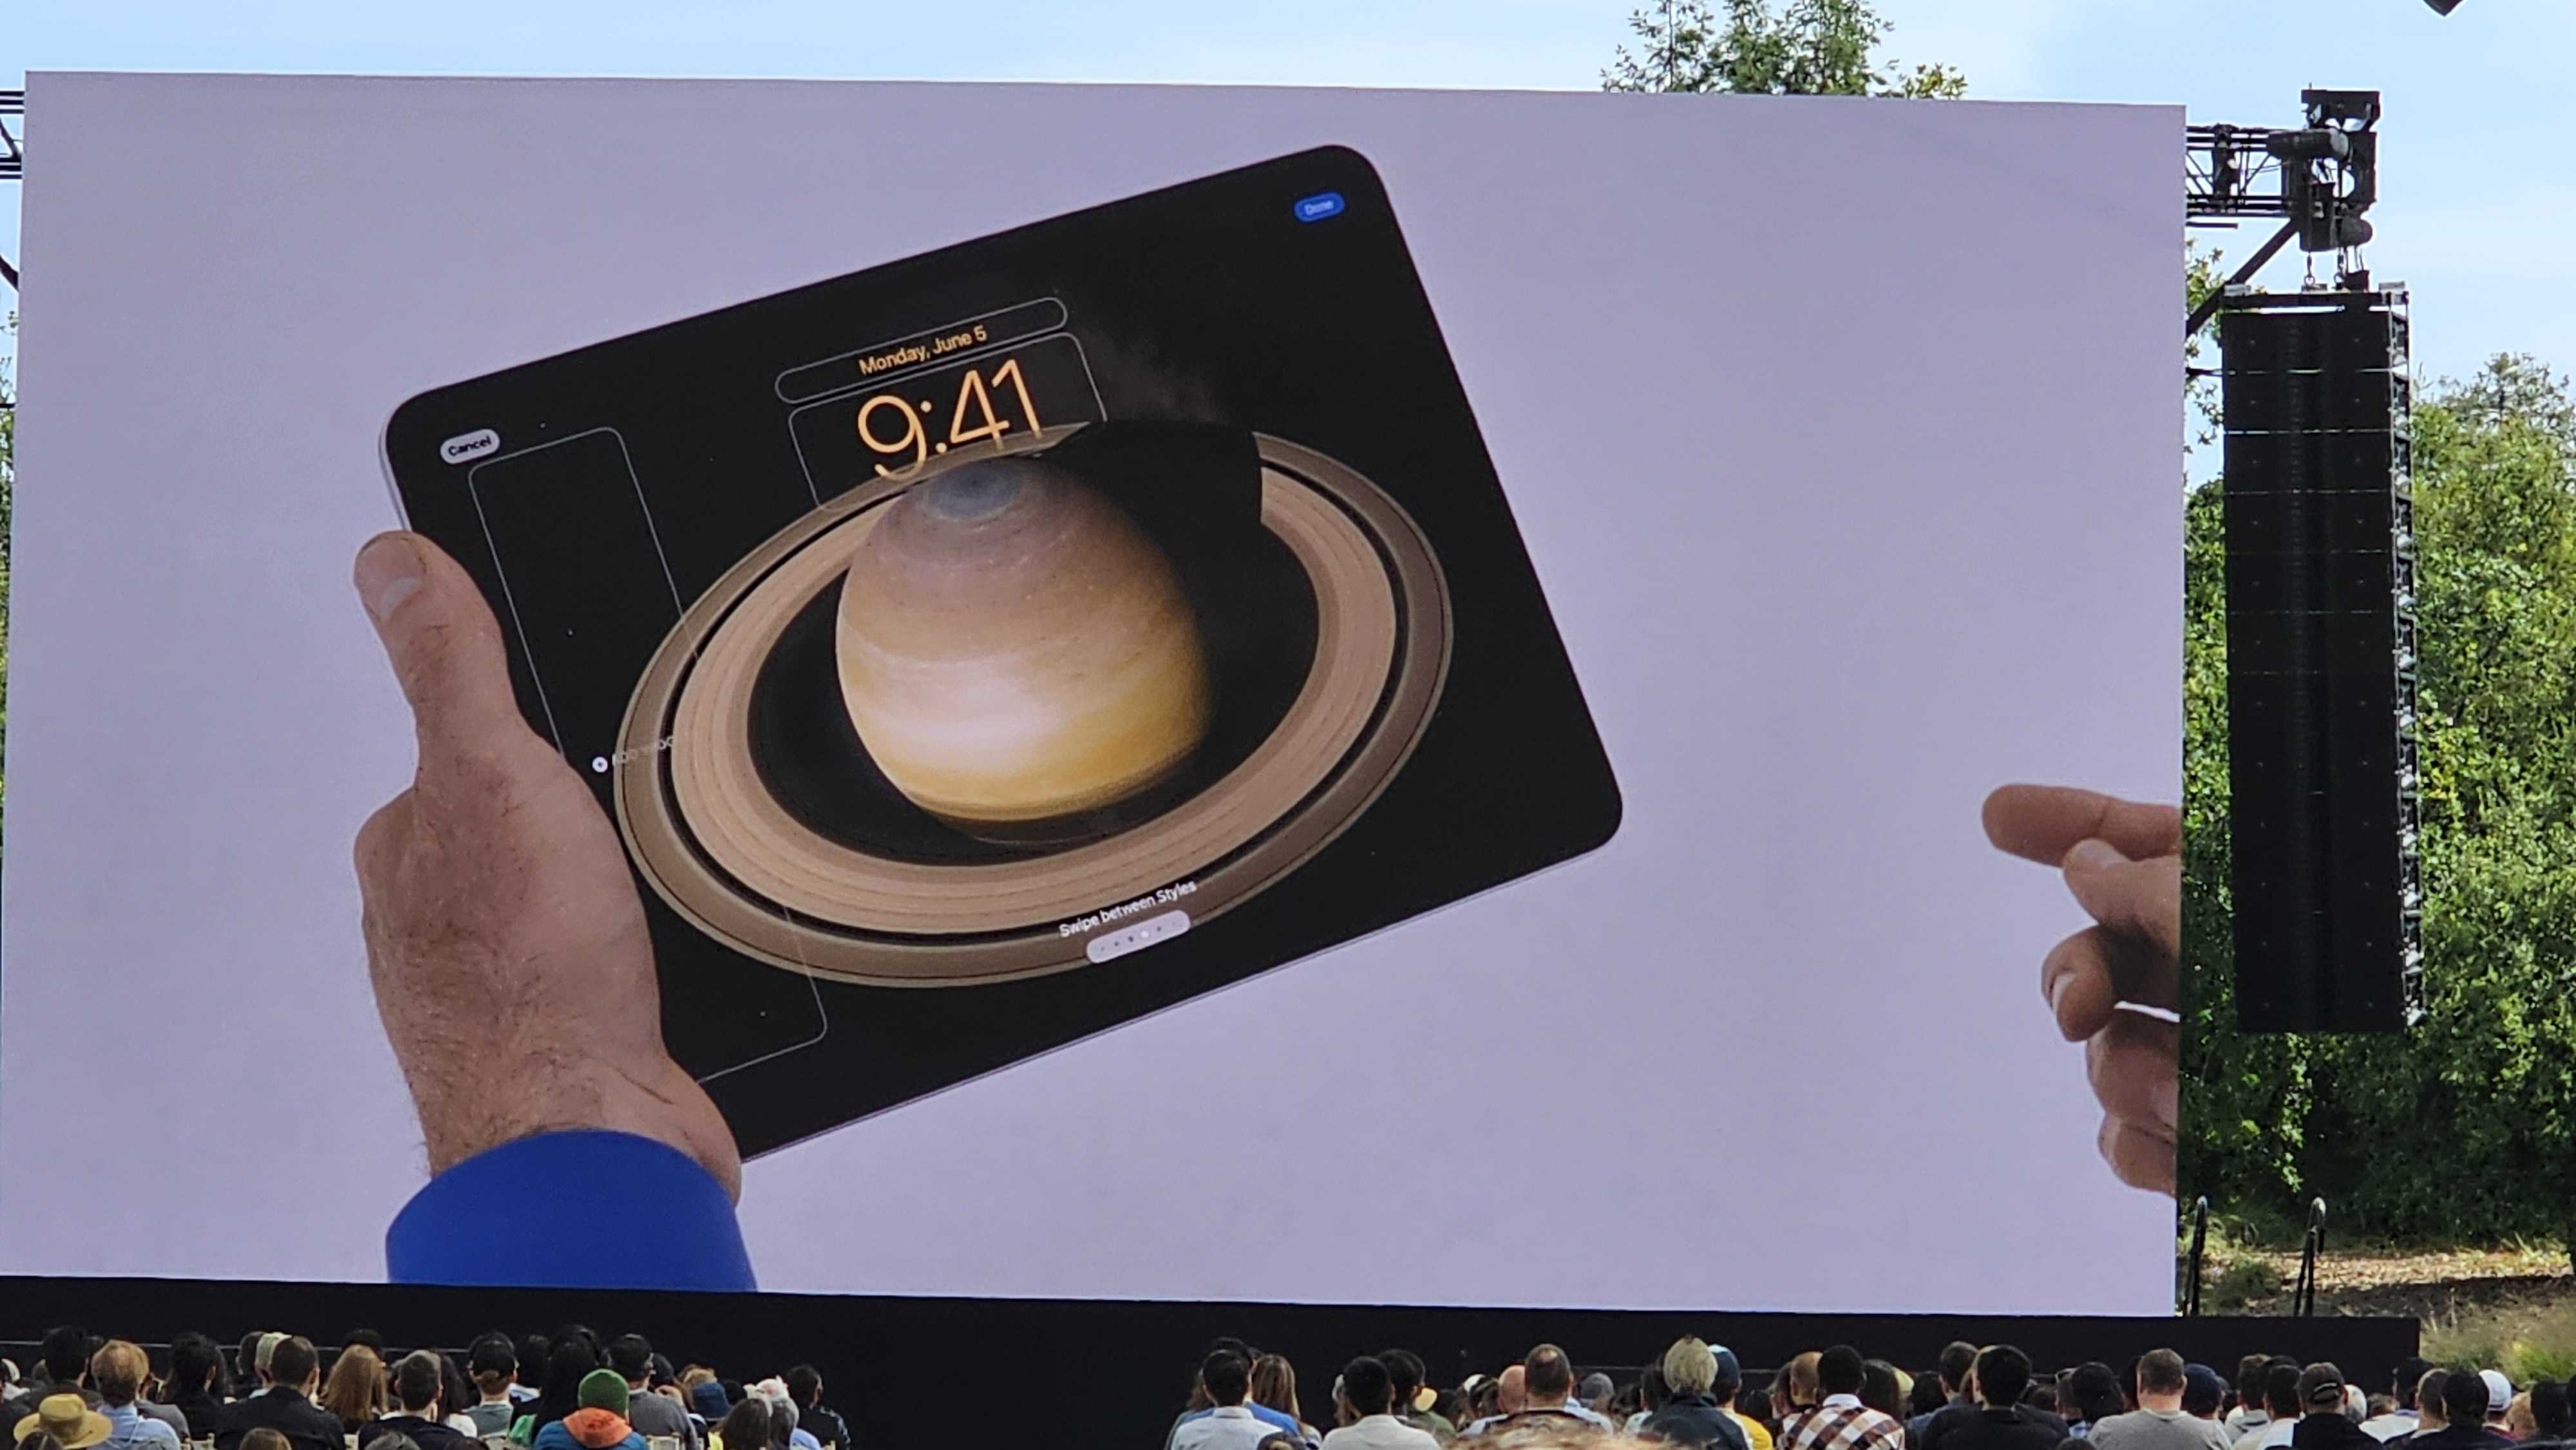 Астрономические обои на новом iPad OS на WWDC 2023